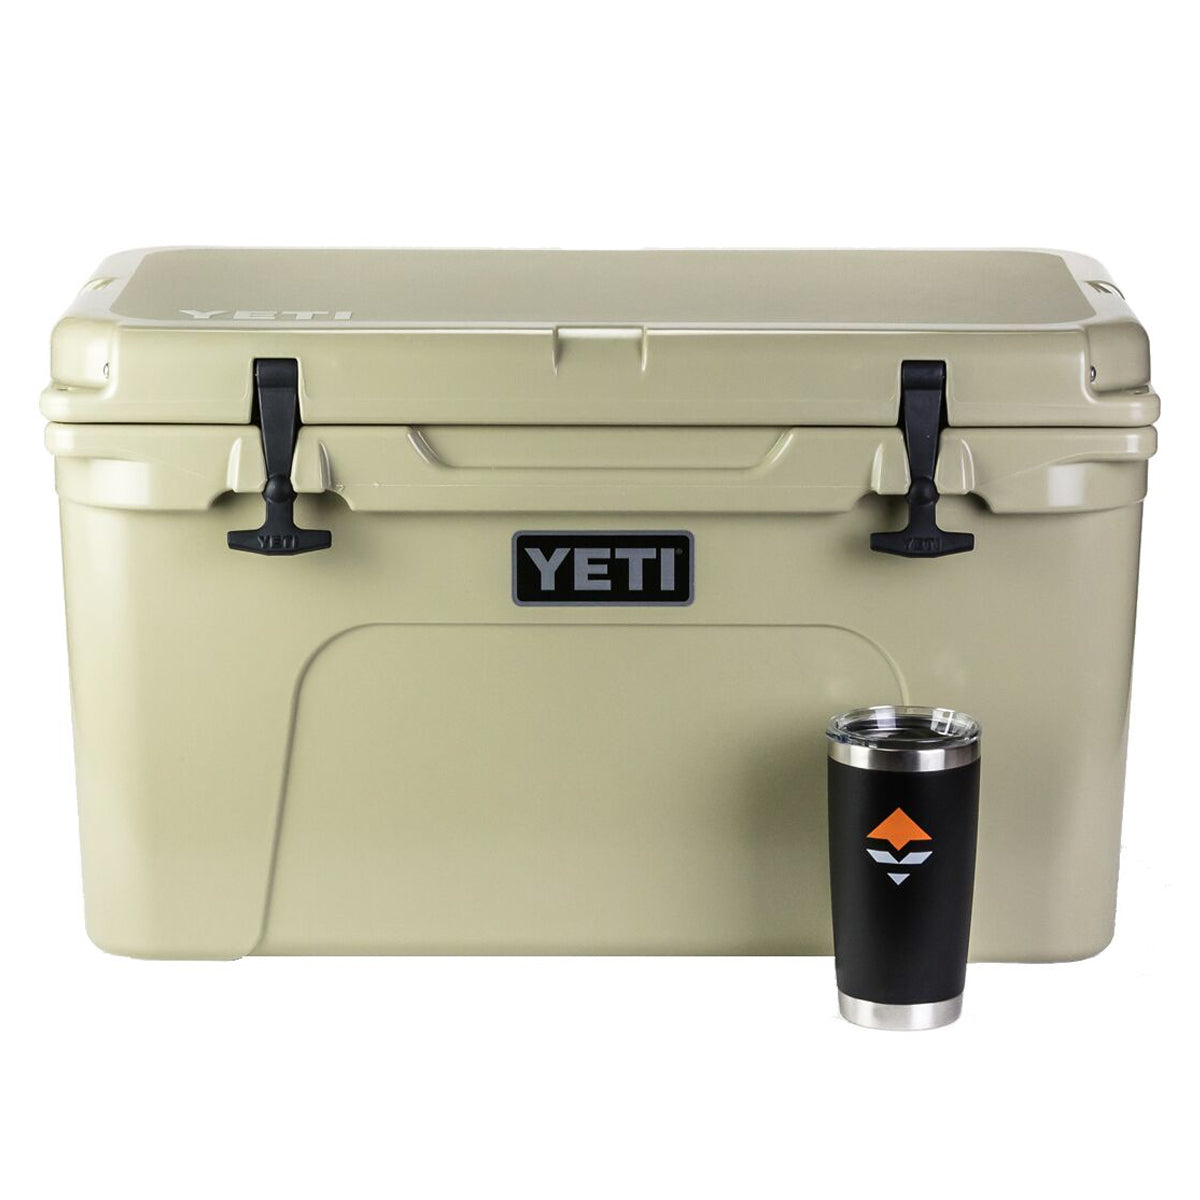 YETI Tundra 45 Tan Cooler & Free goHUNT Rambler by YETI | Camping - goHUNT Shop